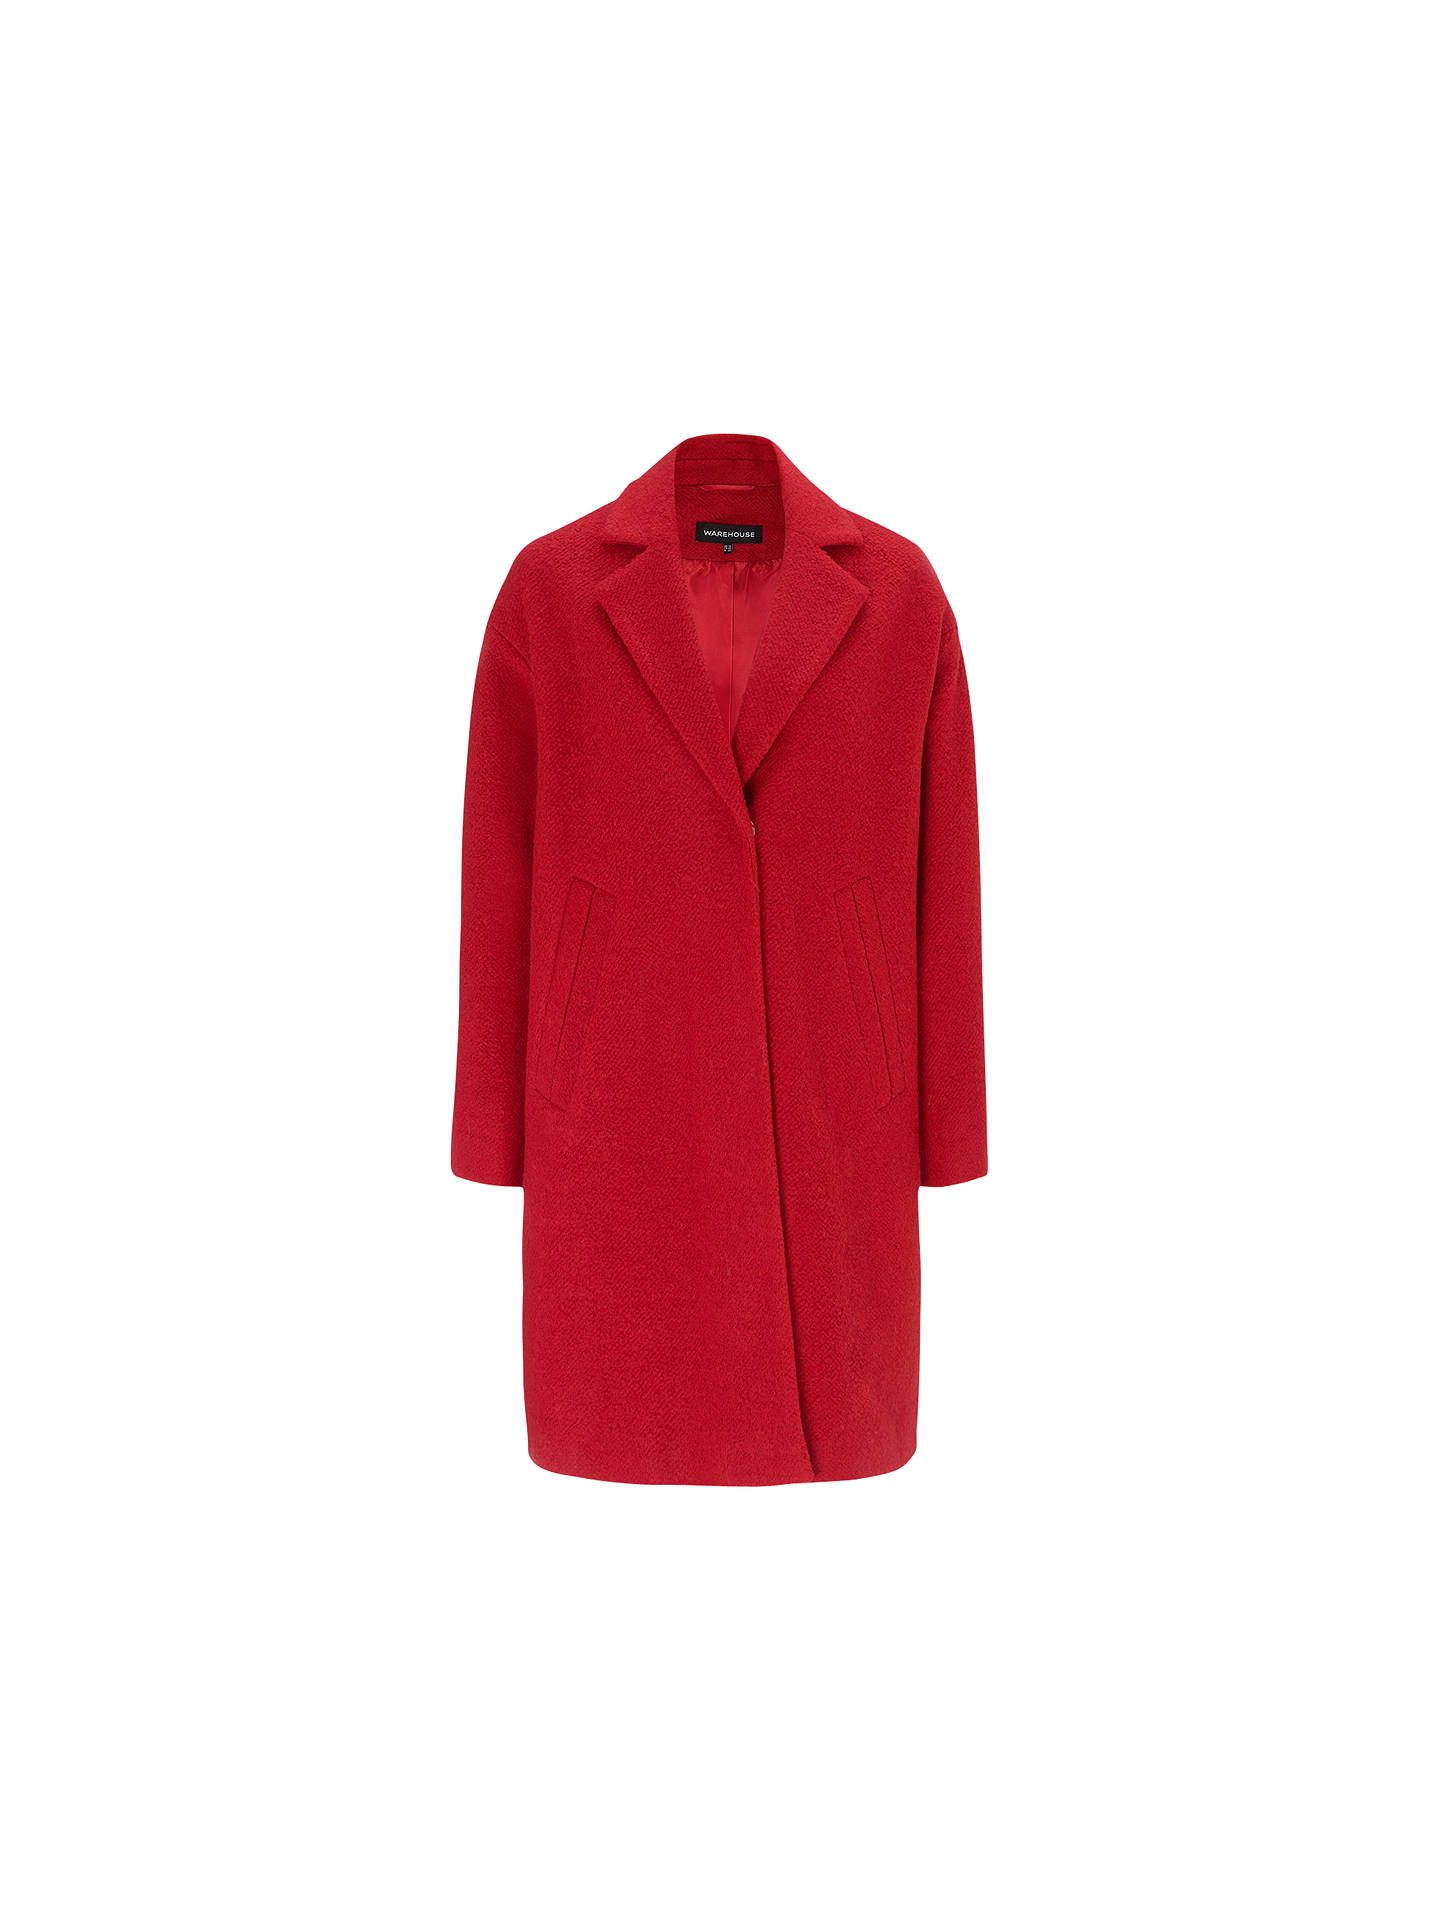 Warehouse Bouclé Wool Blend Coat, Bright Red at John Lewis & Partners